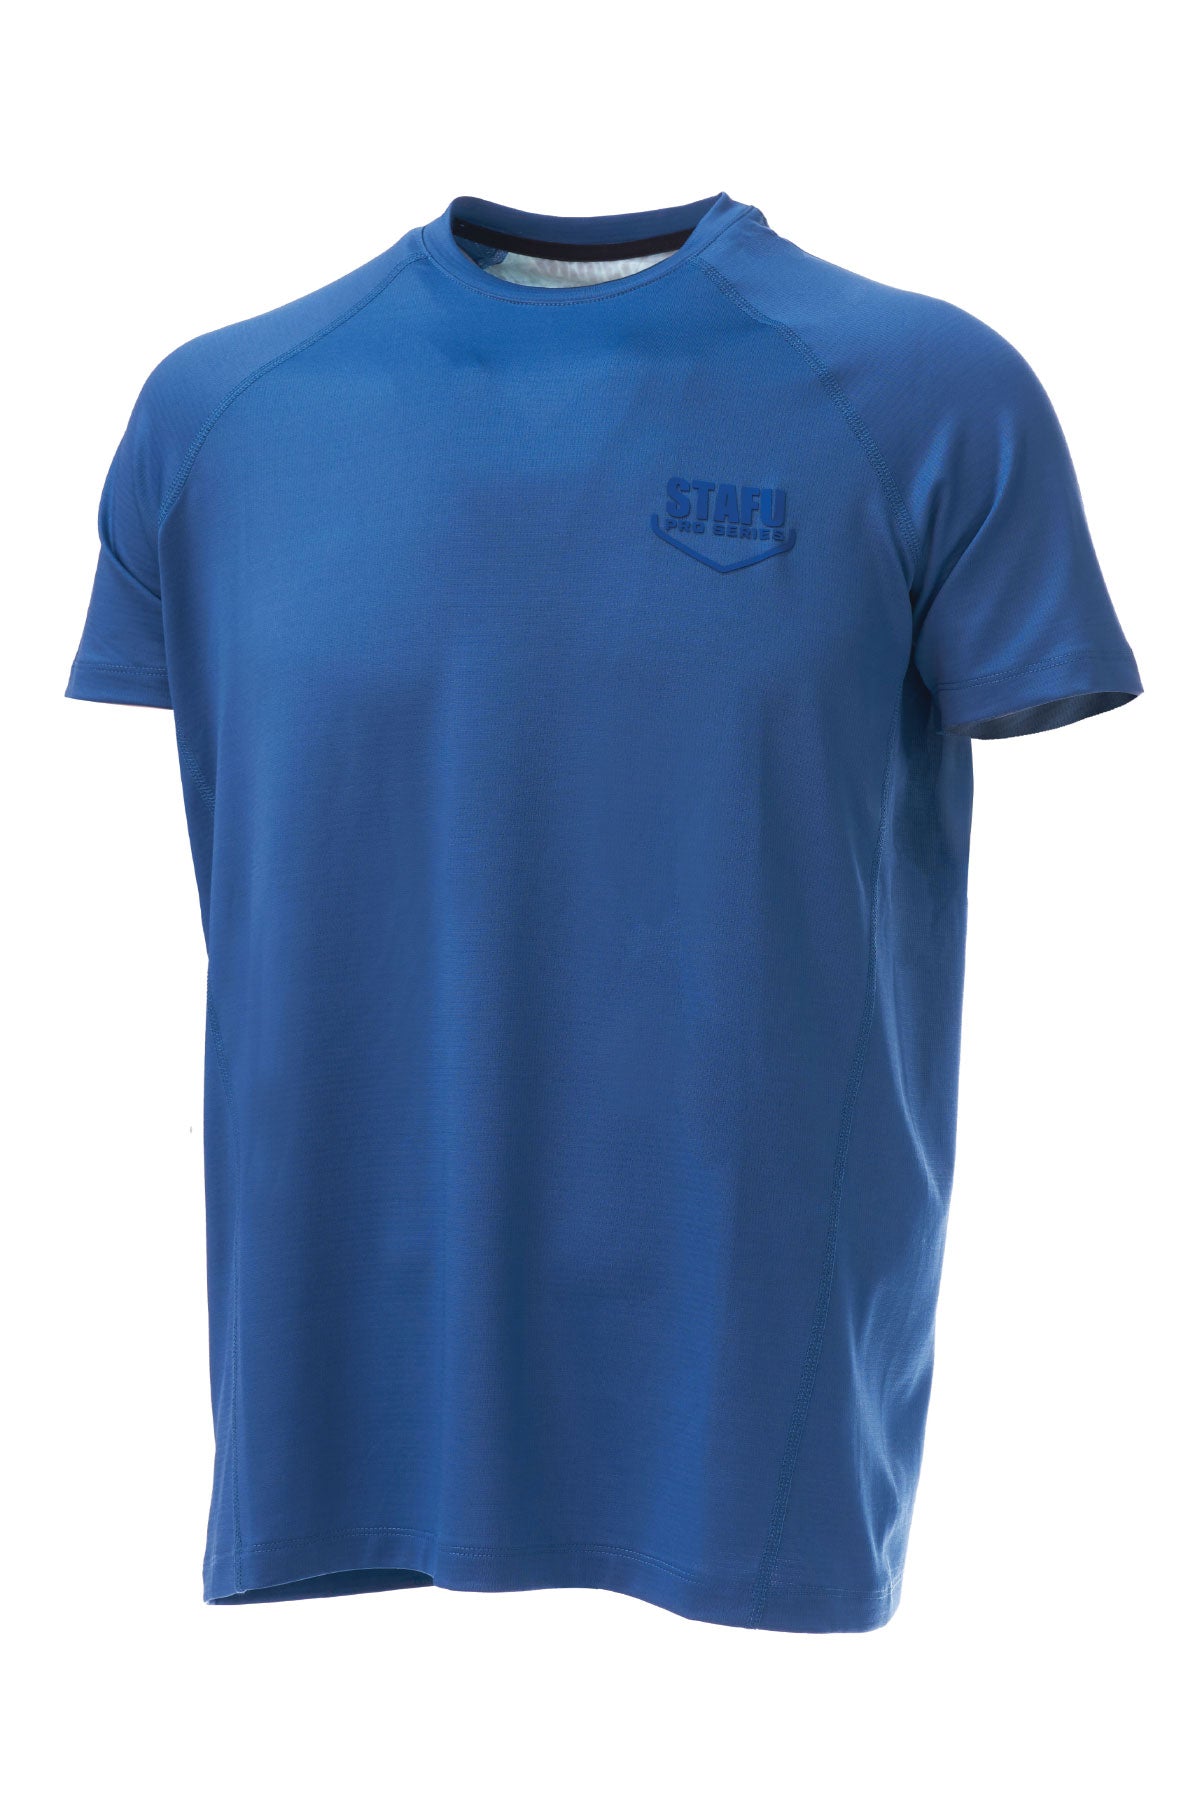 Vamos Men's Short Sleeve Fisherman Sports Blue UV Protected Shirt